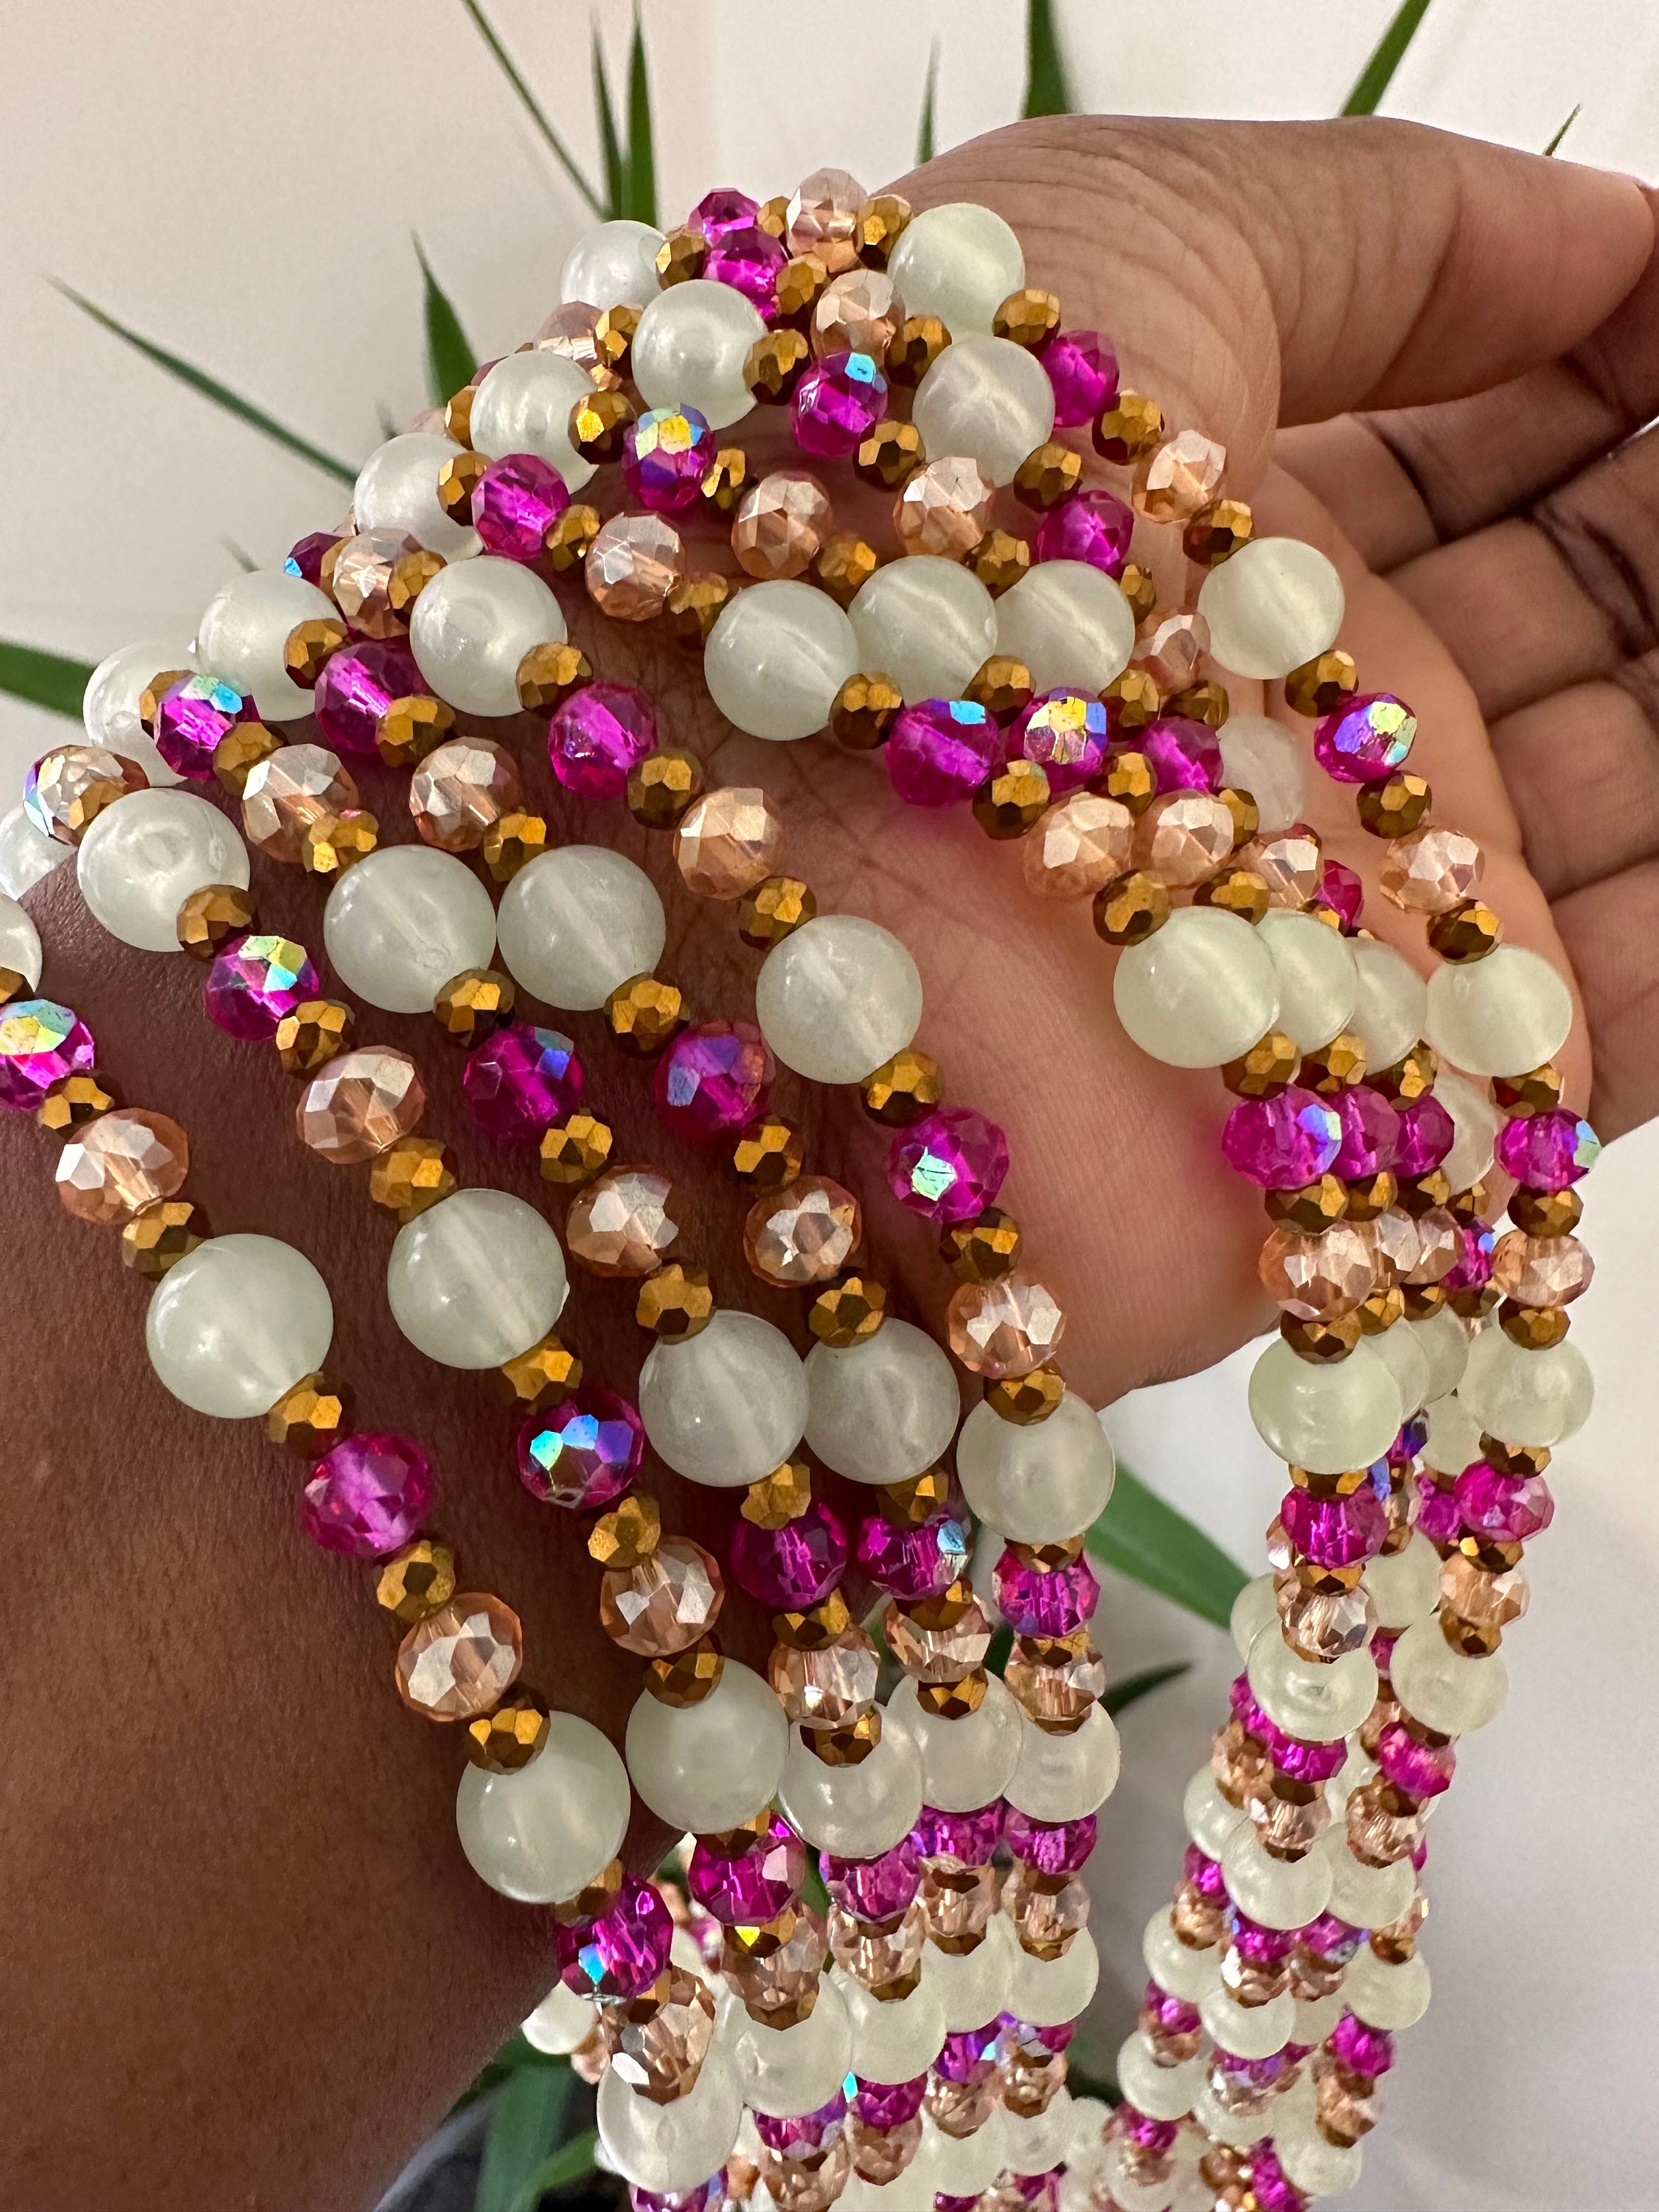 Crystal Glow in the Dark African Waist Beads Self Tie Waist Management  Beads Belly Chain Crystal Waist Beads Glow in the Dark 